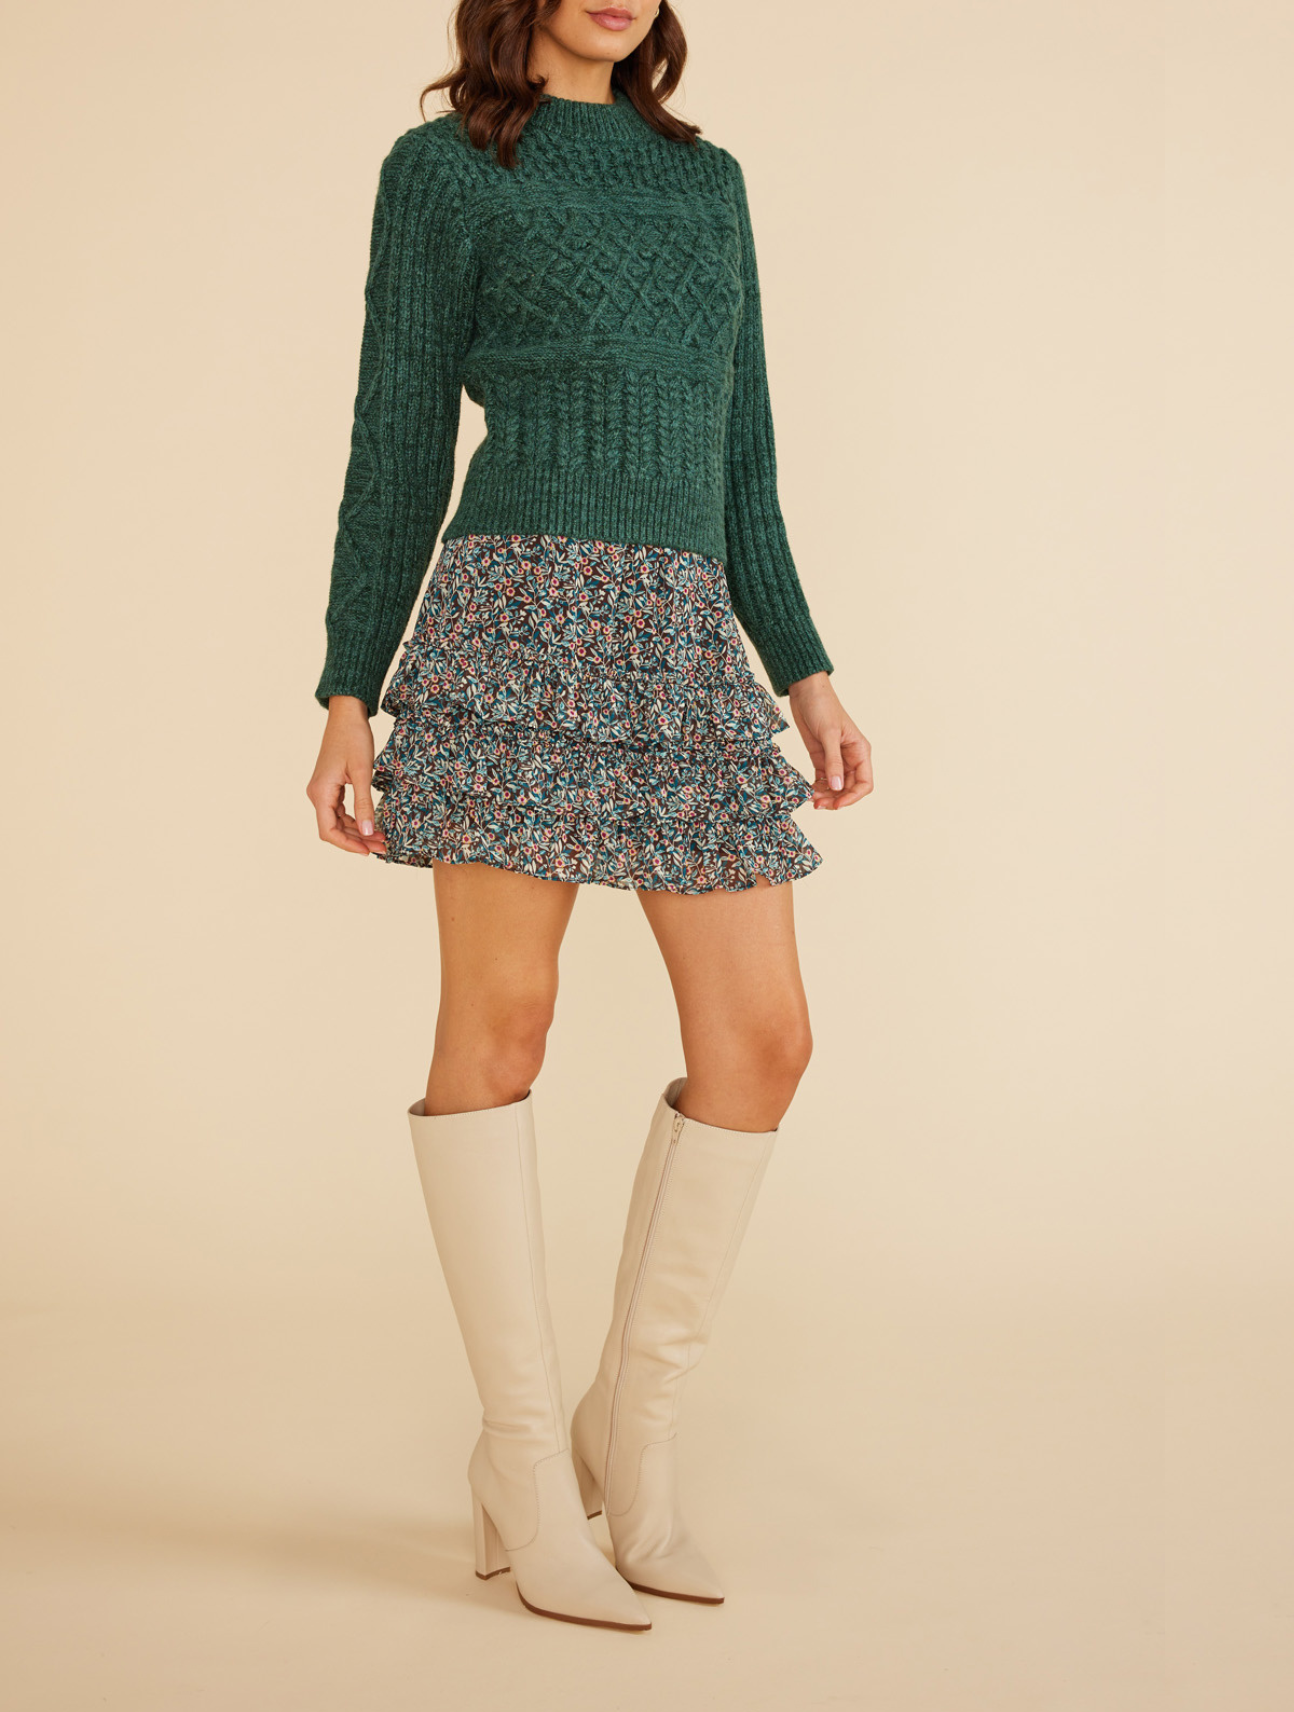 Kira Cable Knit Sweater